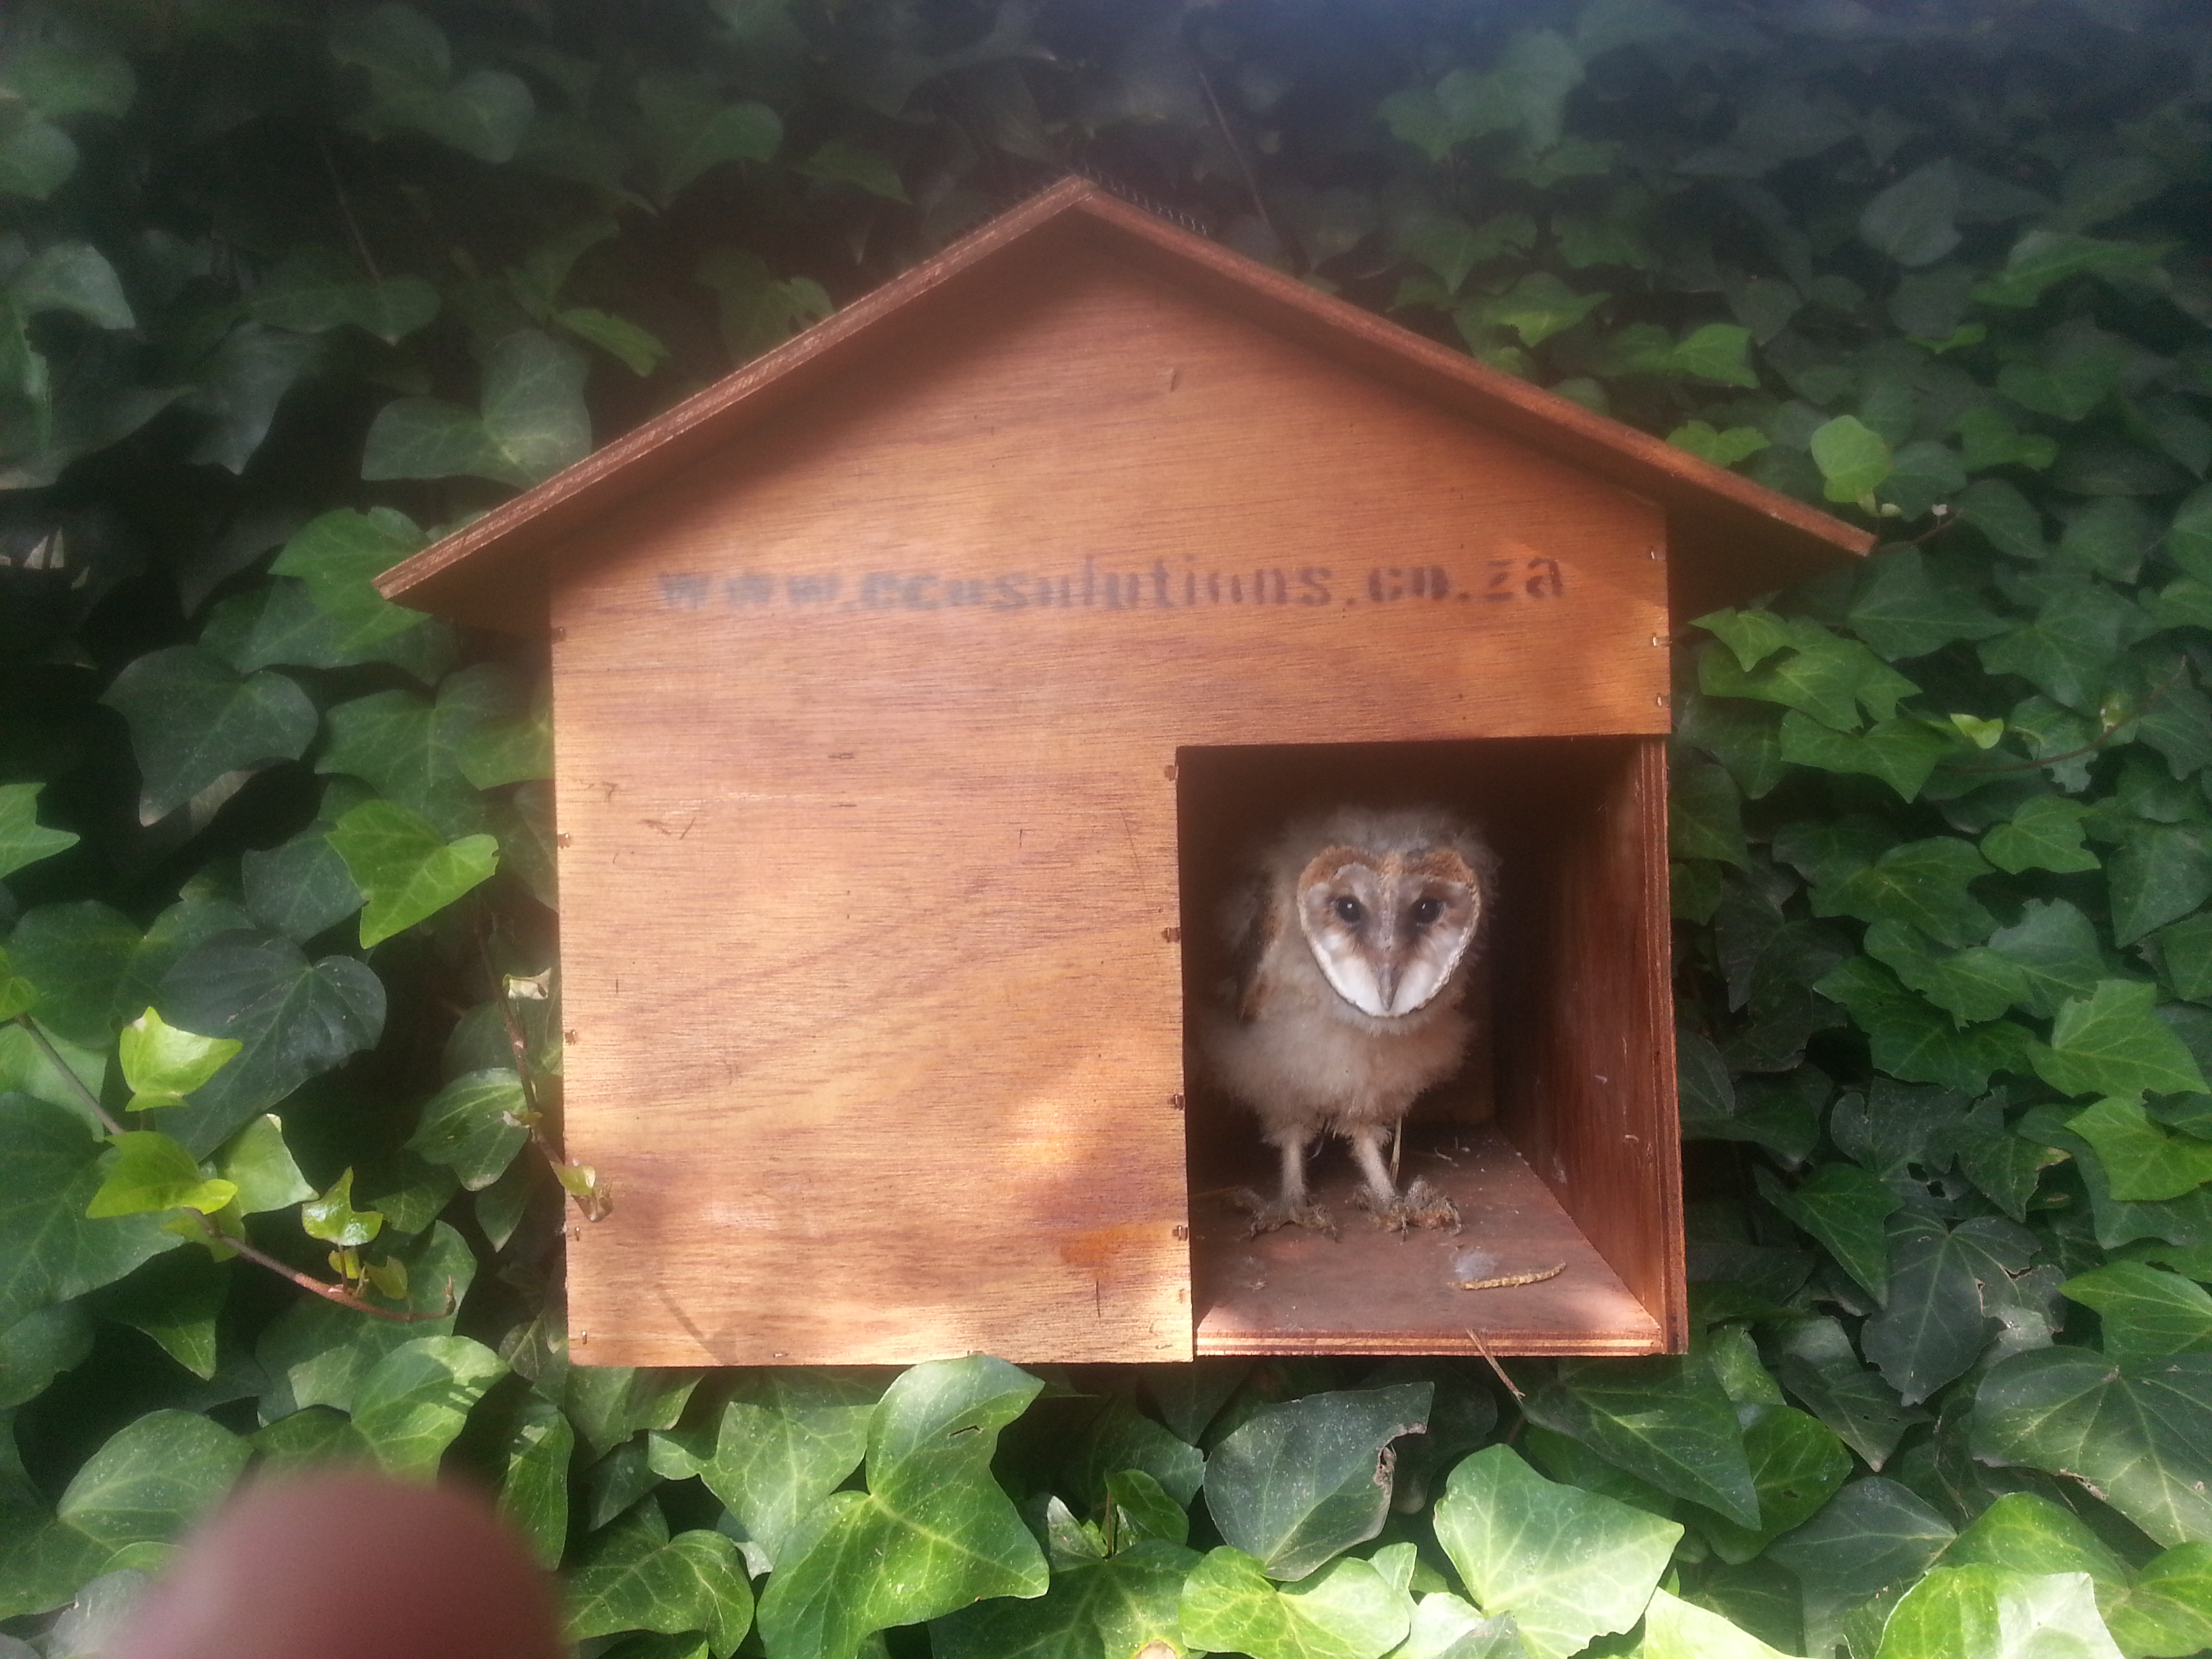 Barn owl in box